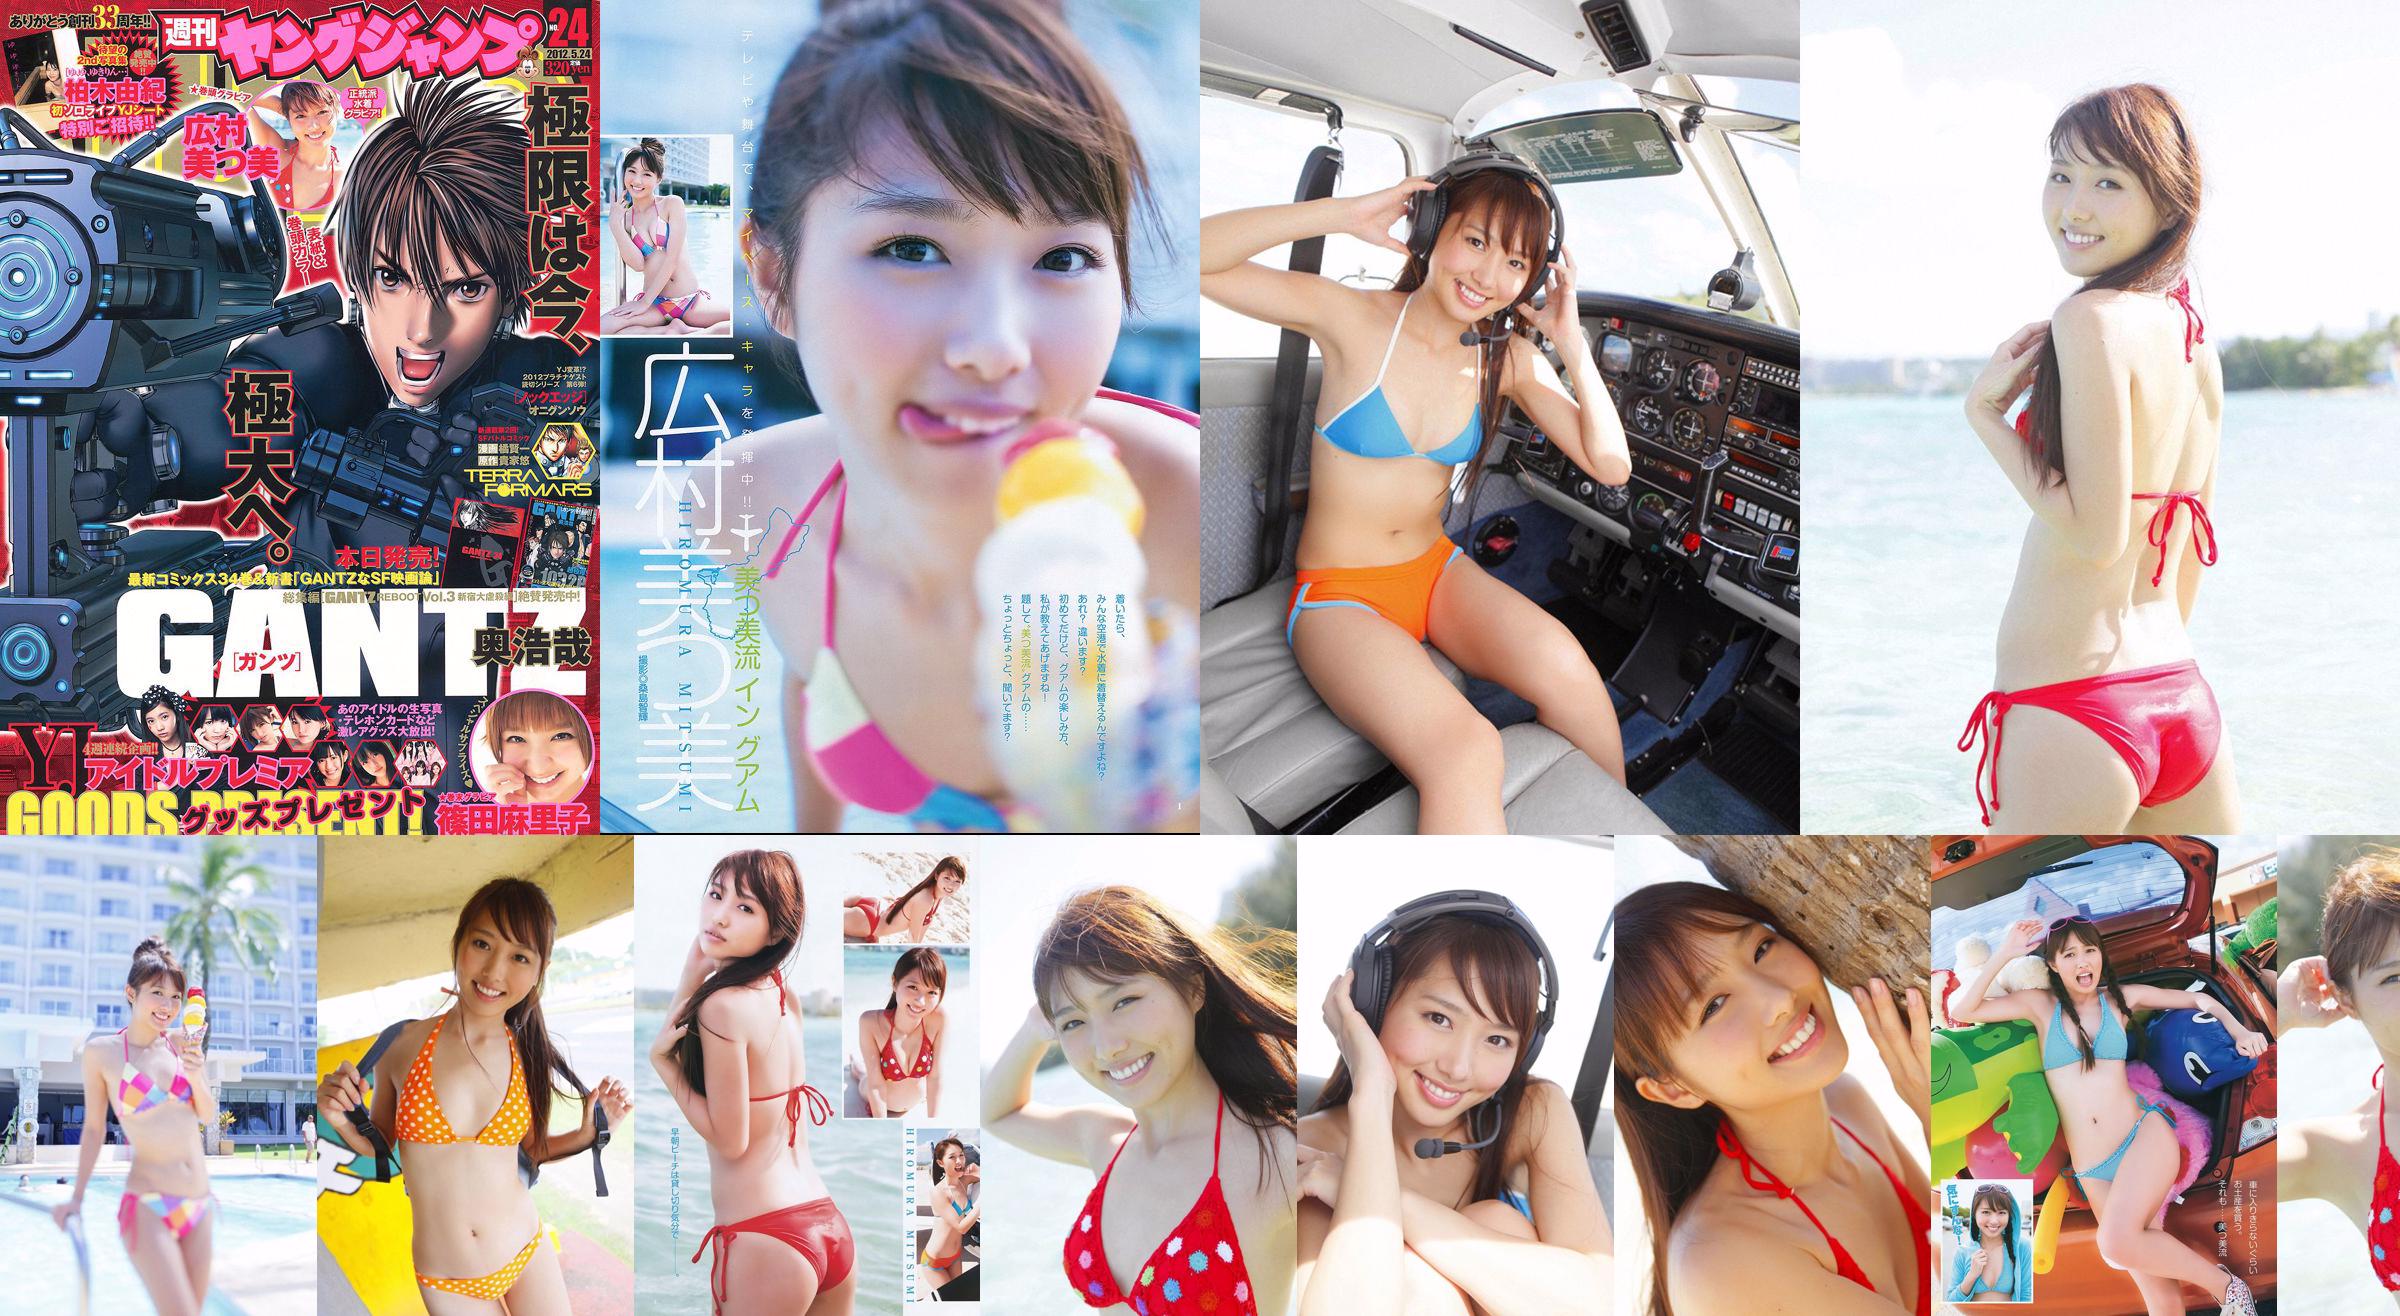 Mitsumi Hiromura Mariko Shinoda [Lompat Muda Mingguan] 2012 Majalah Foto No.24 No.a1a5b1 Halaman 1